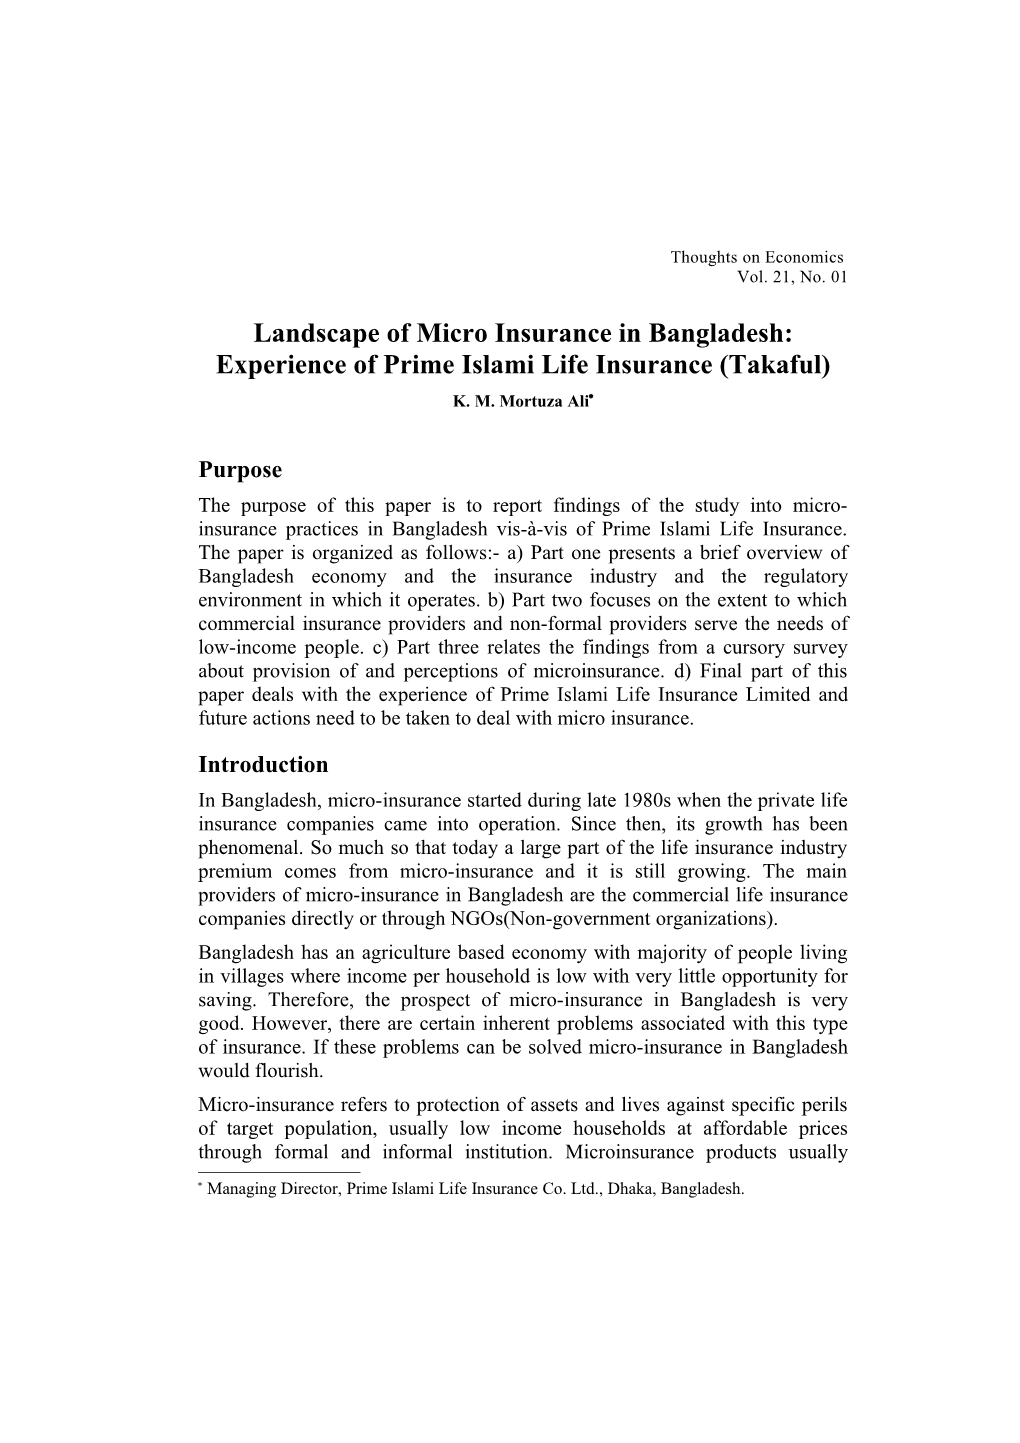 Landscape of Micro Insurance in Bangladesh